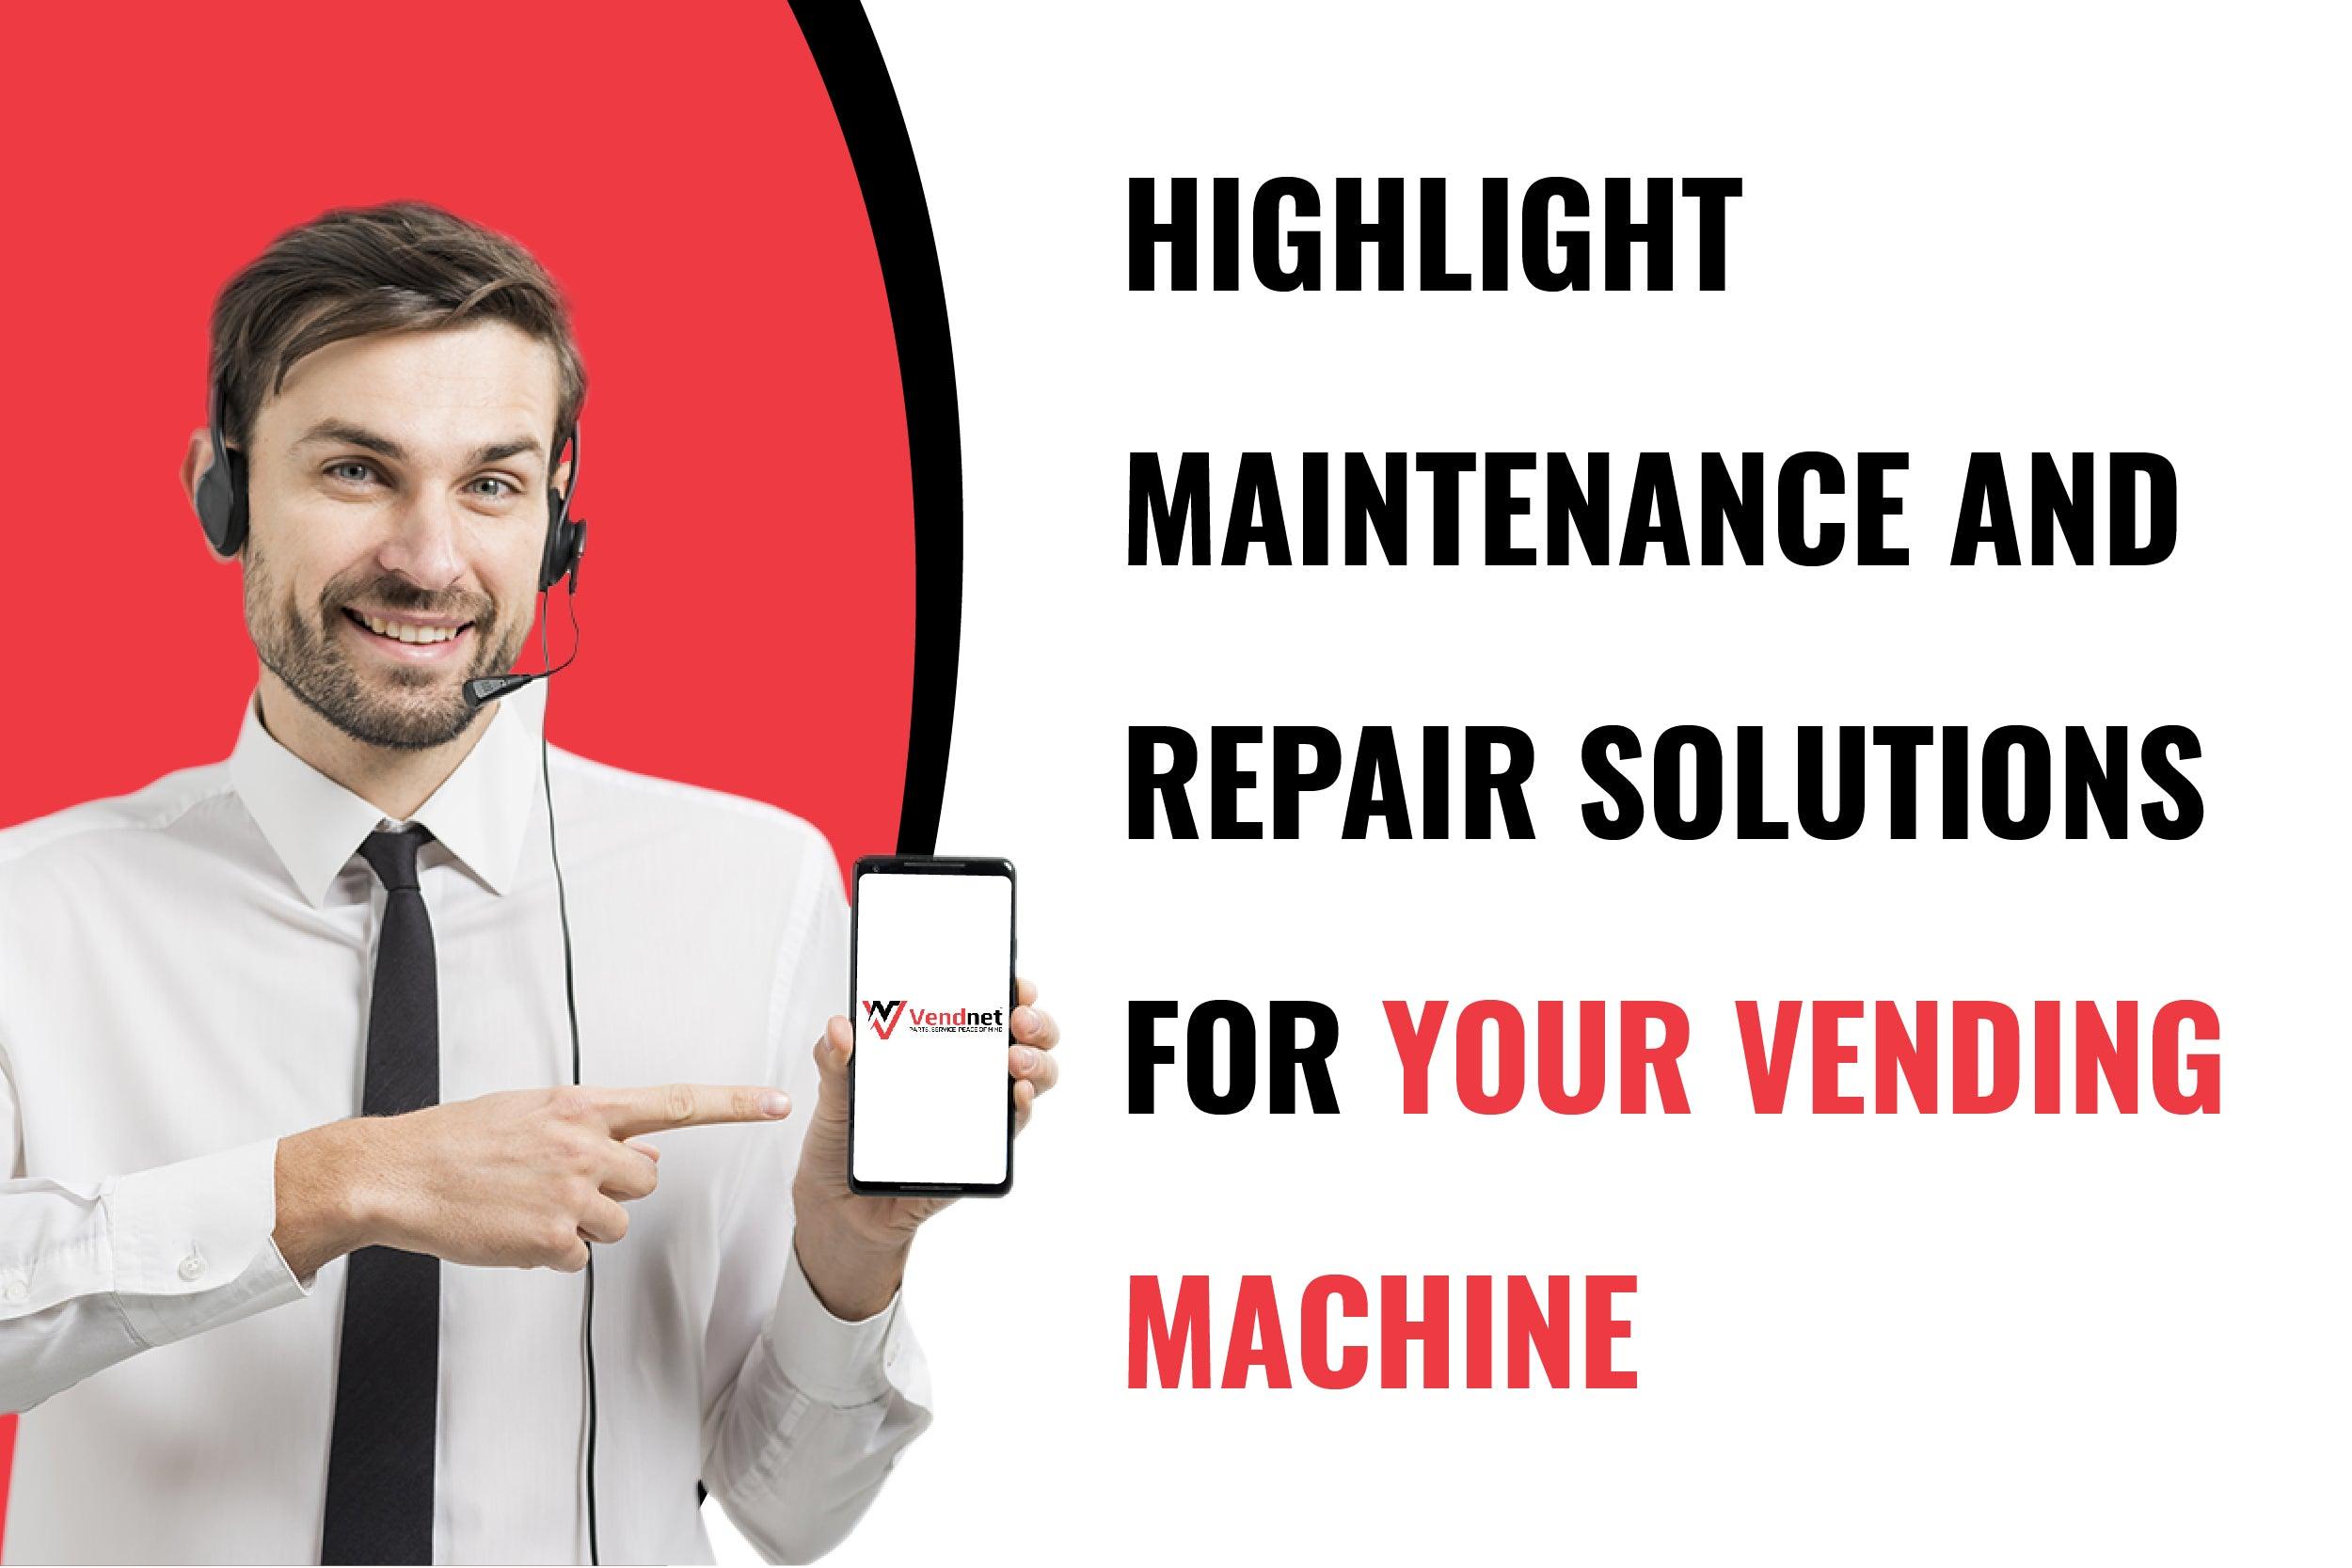 Vending Maintenance: Highlight Maintenance and Repair Solutions for Your Vending Machine - Vendnet